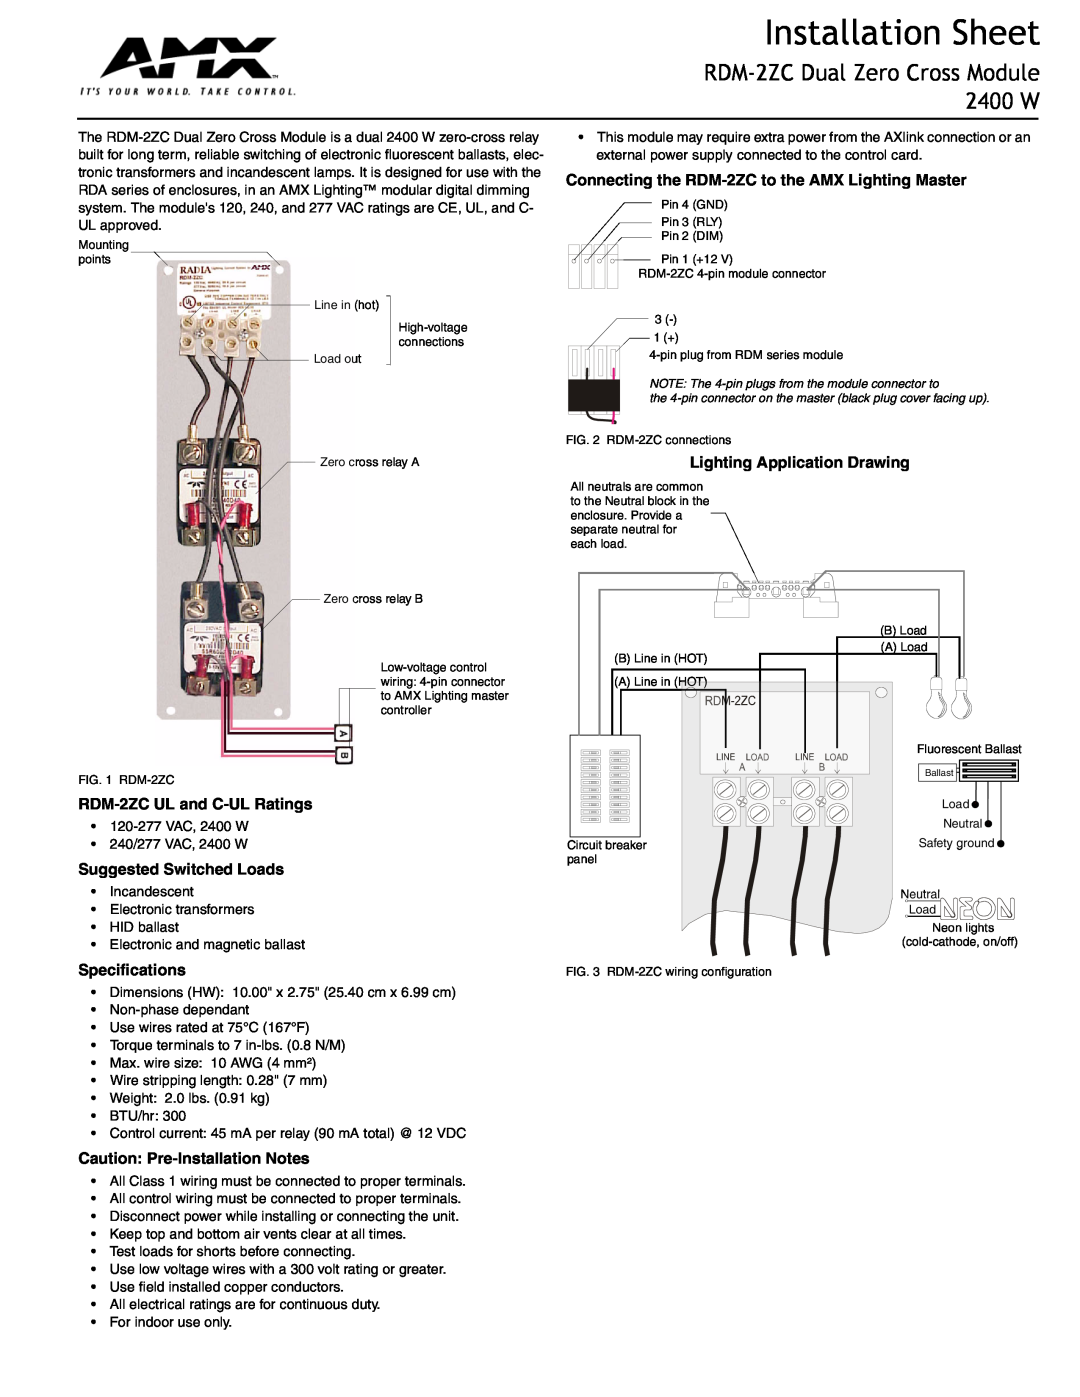 AMX specifications Installation Sheet, RDM-2ZC Dual Zero Cross Module 2400 W, Lighting Application Drawing 